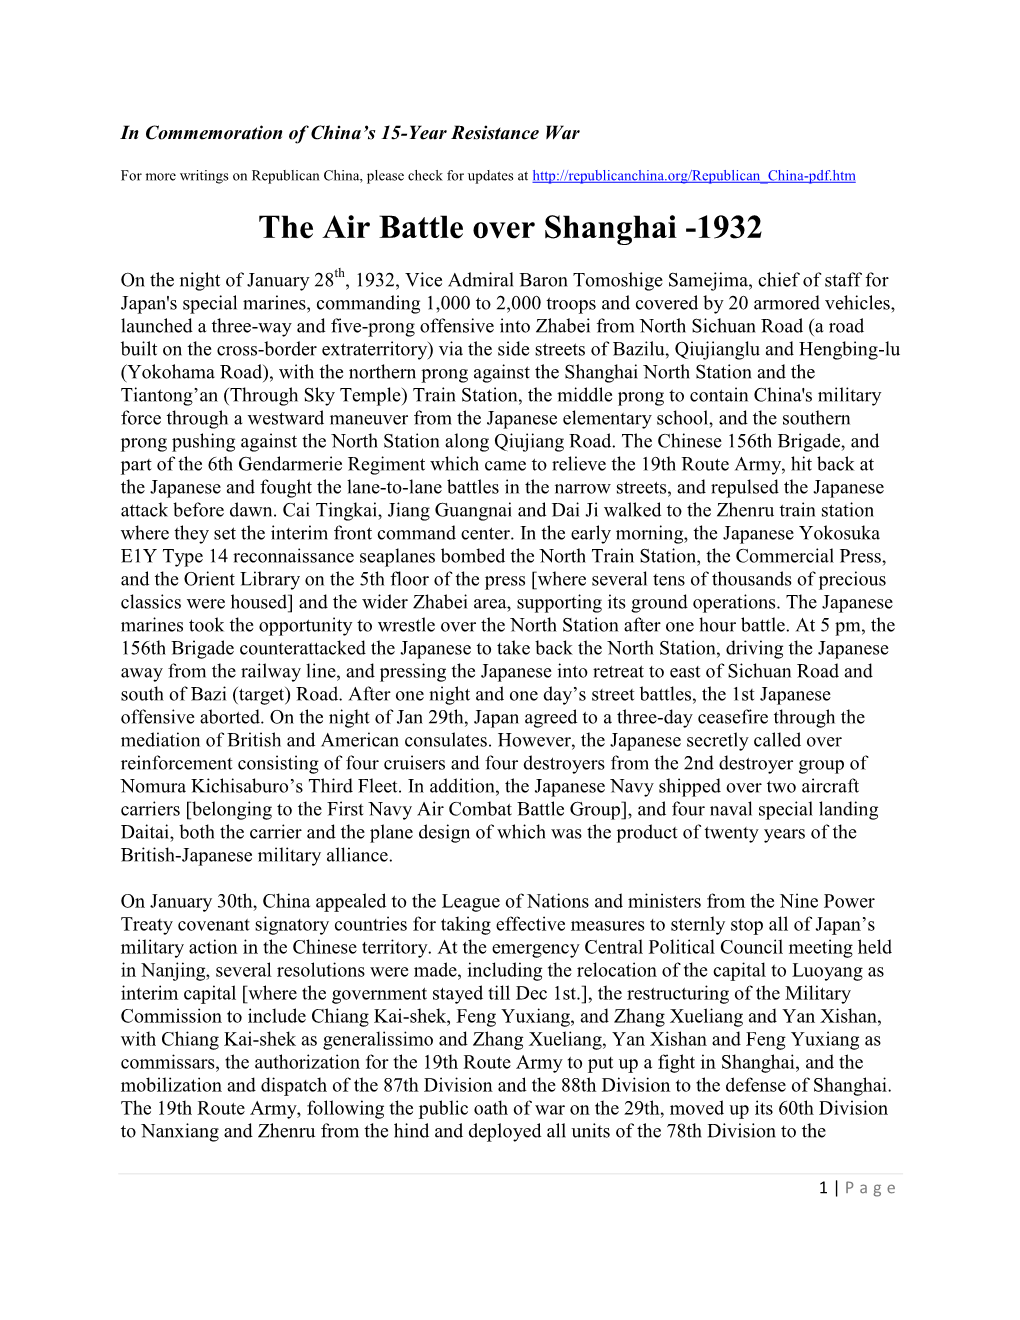 The Air Battle Over Shanghai -1932